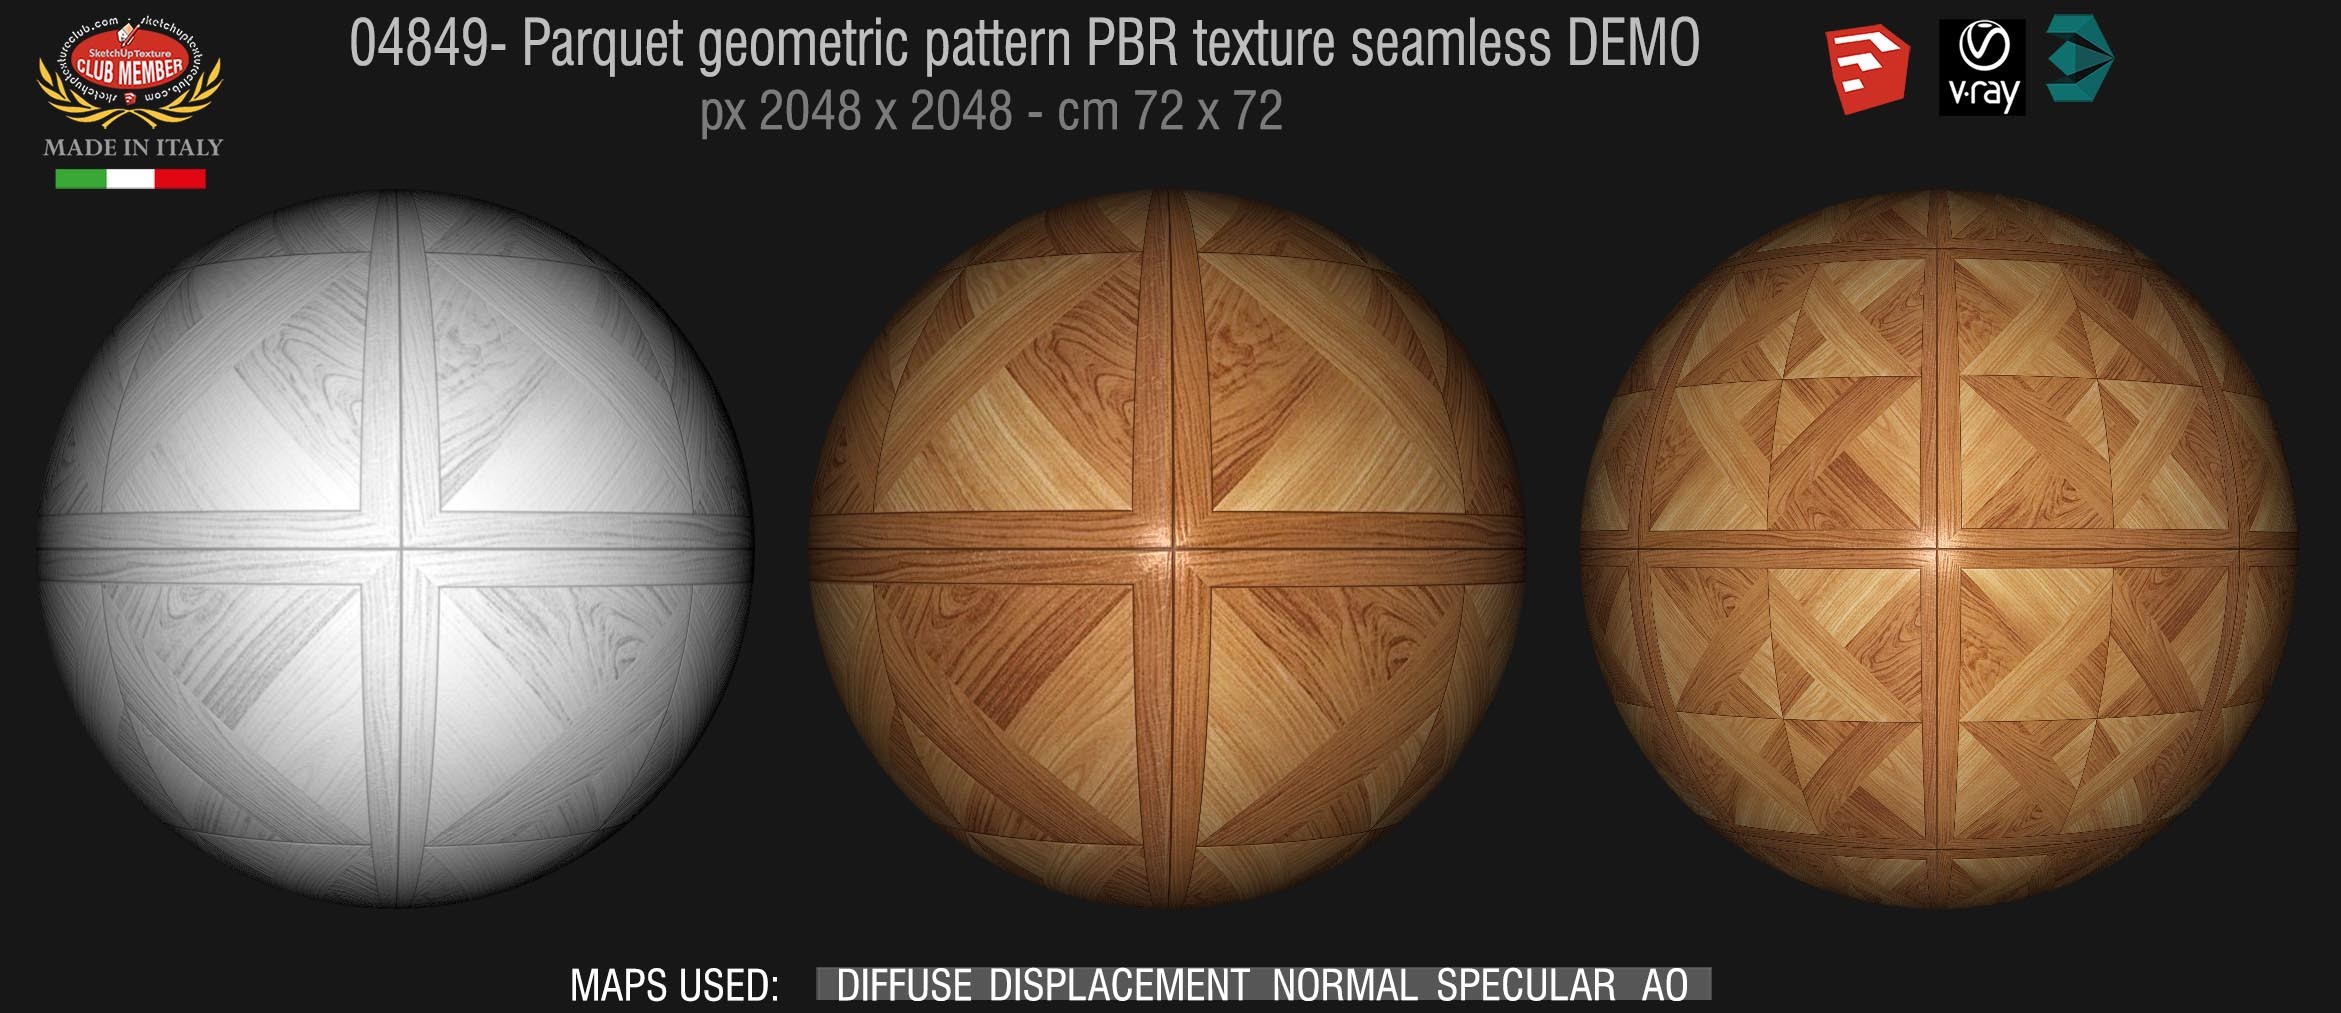 04849 Parquet geometric pattern PBR texture seamless DEMO